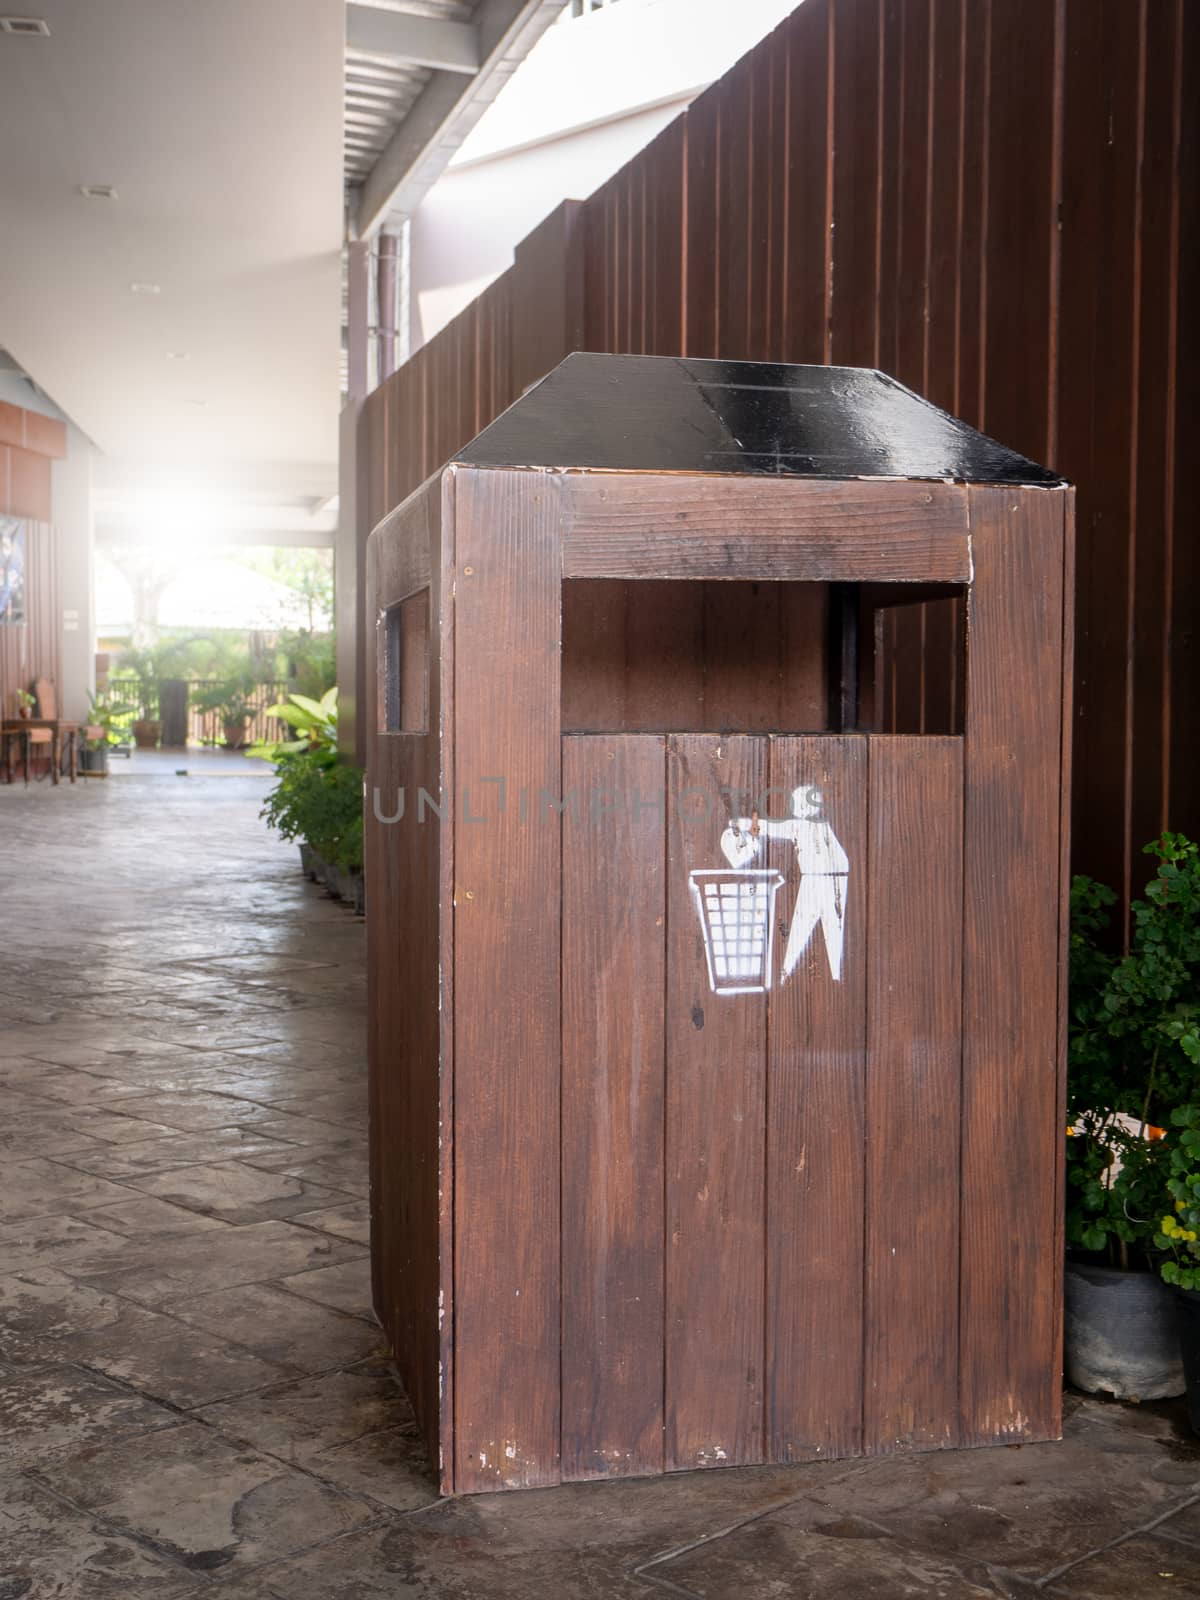 Vintage Wood trash bin design to prevent be wet from rain